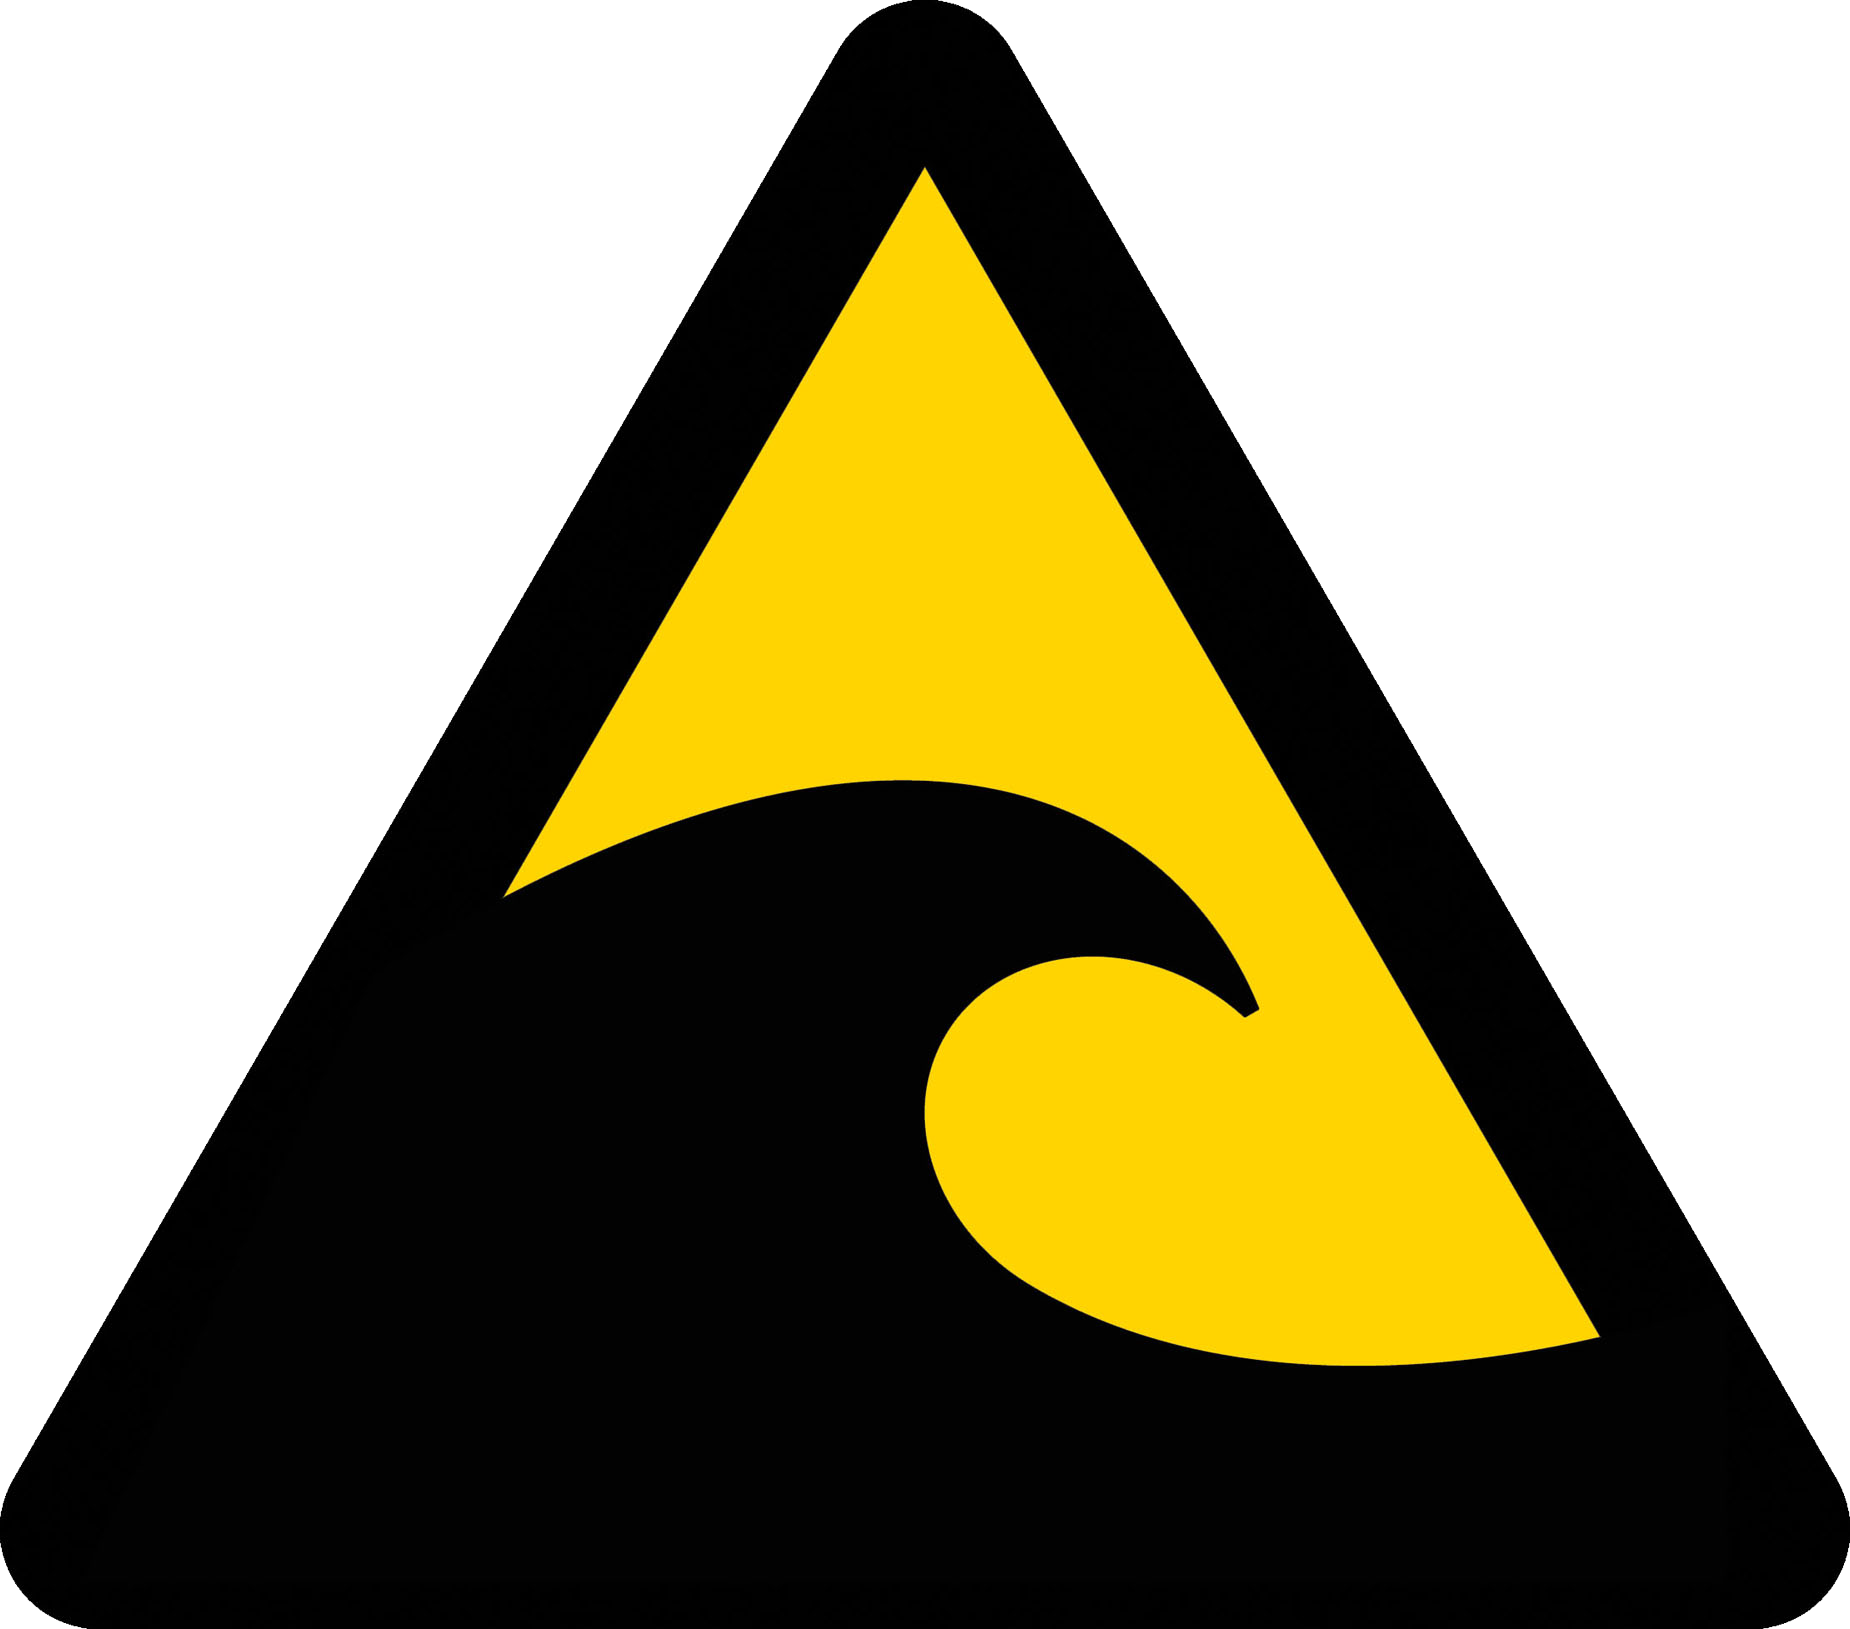 Tsunami Warning Sign Graphic